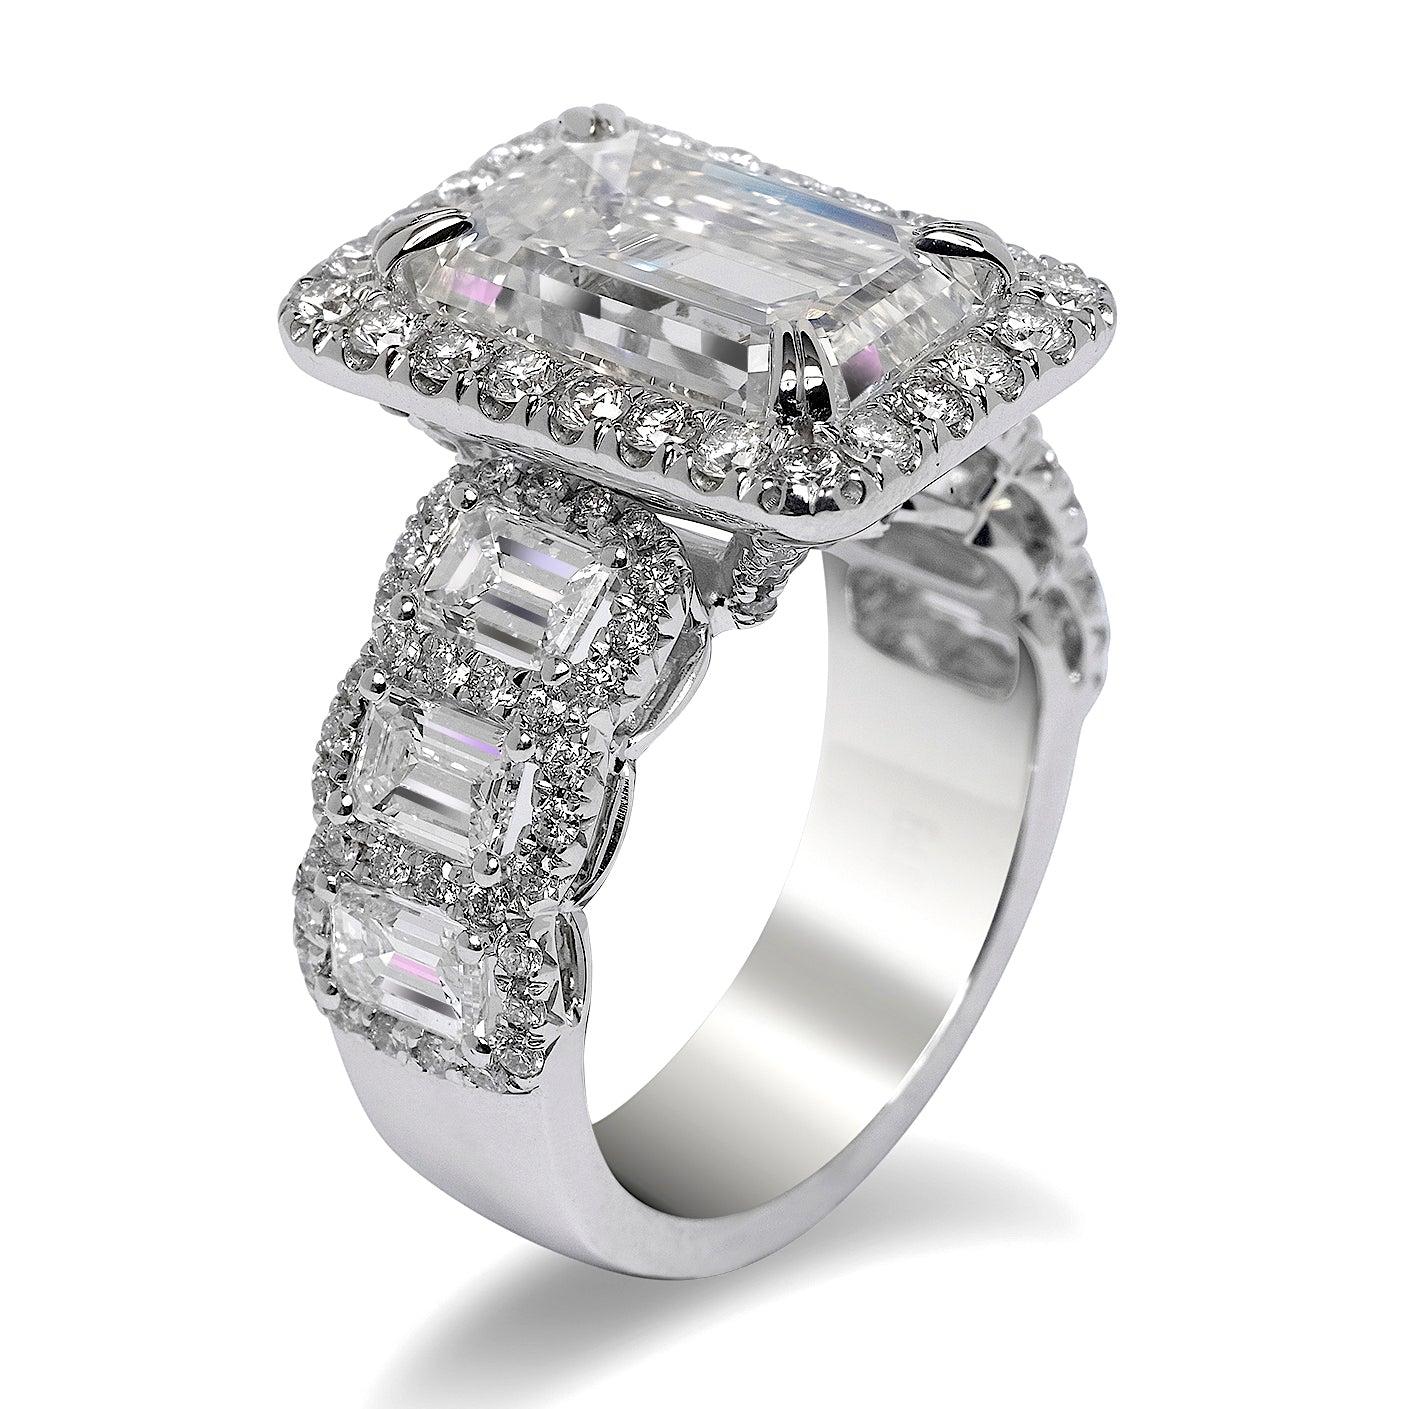 9 carat diamond engagement ring